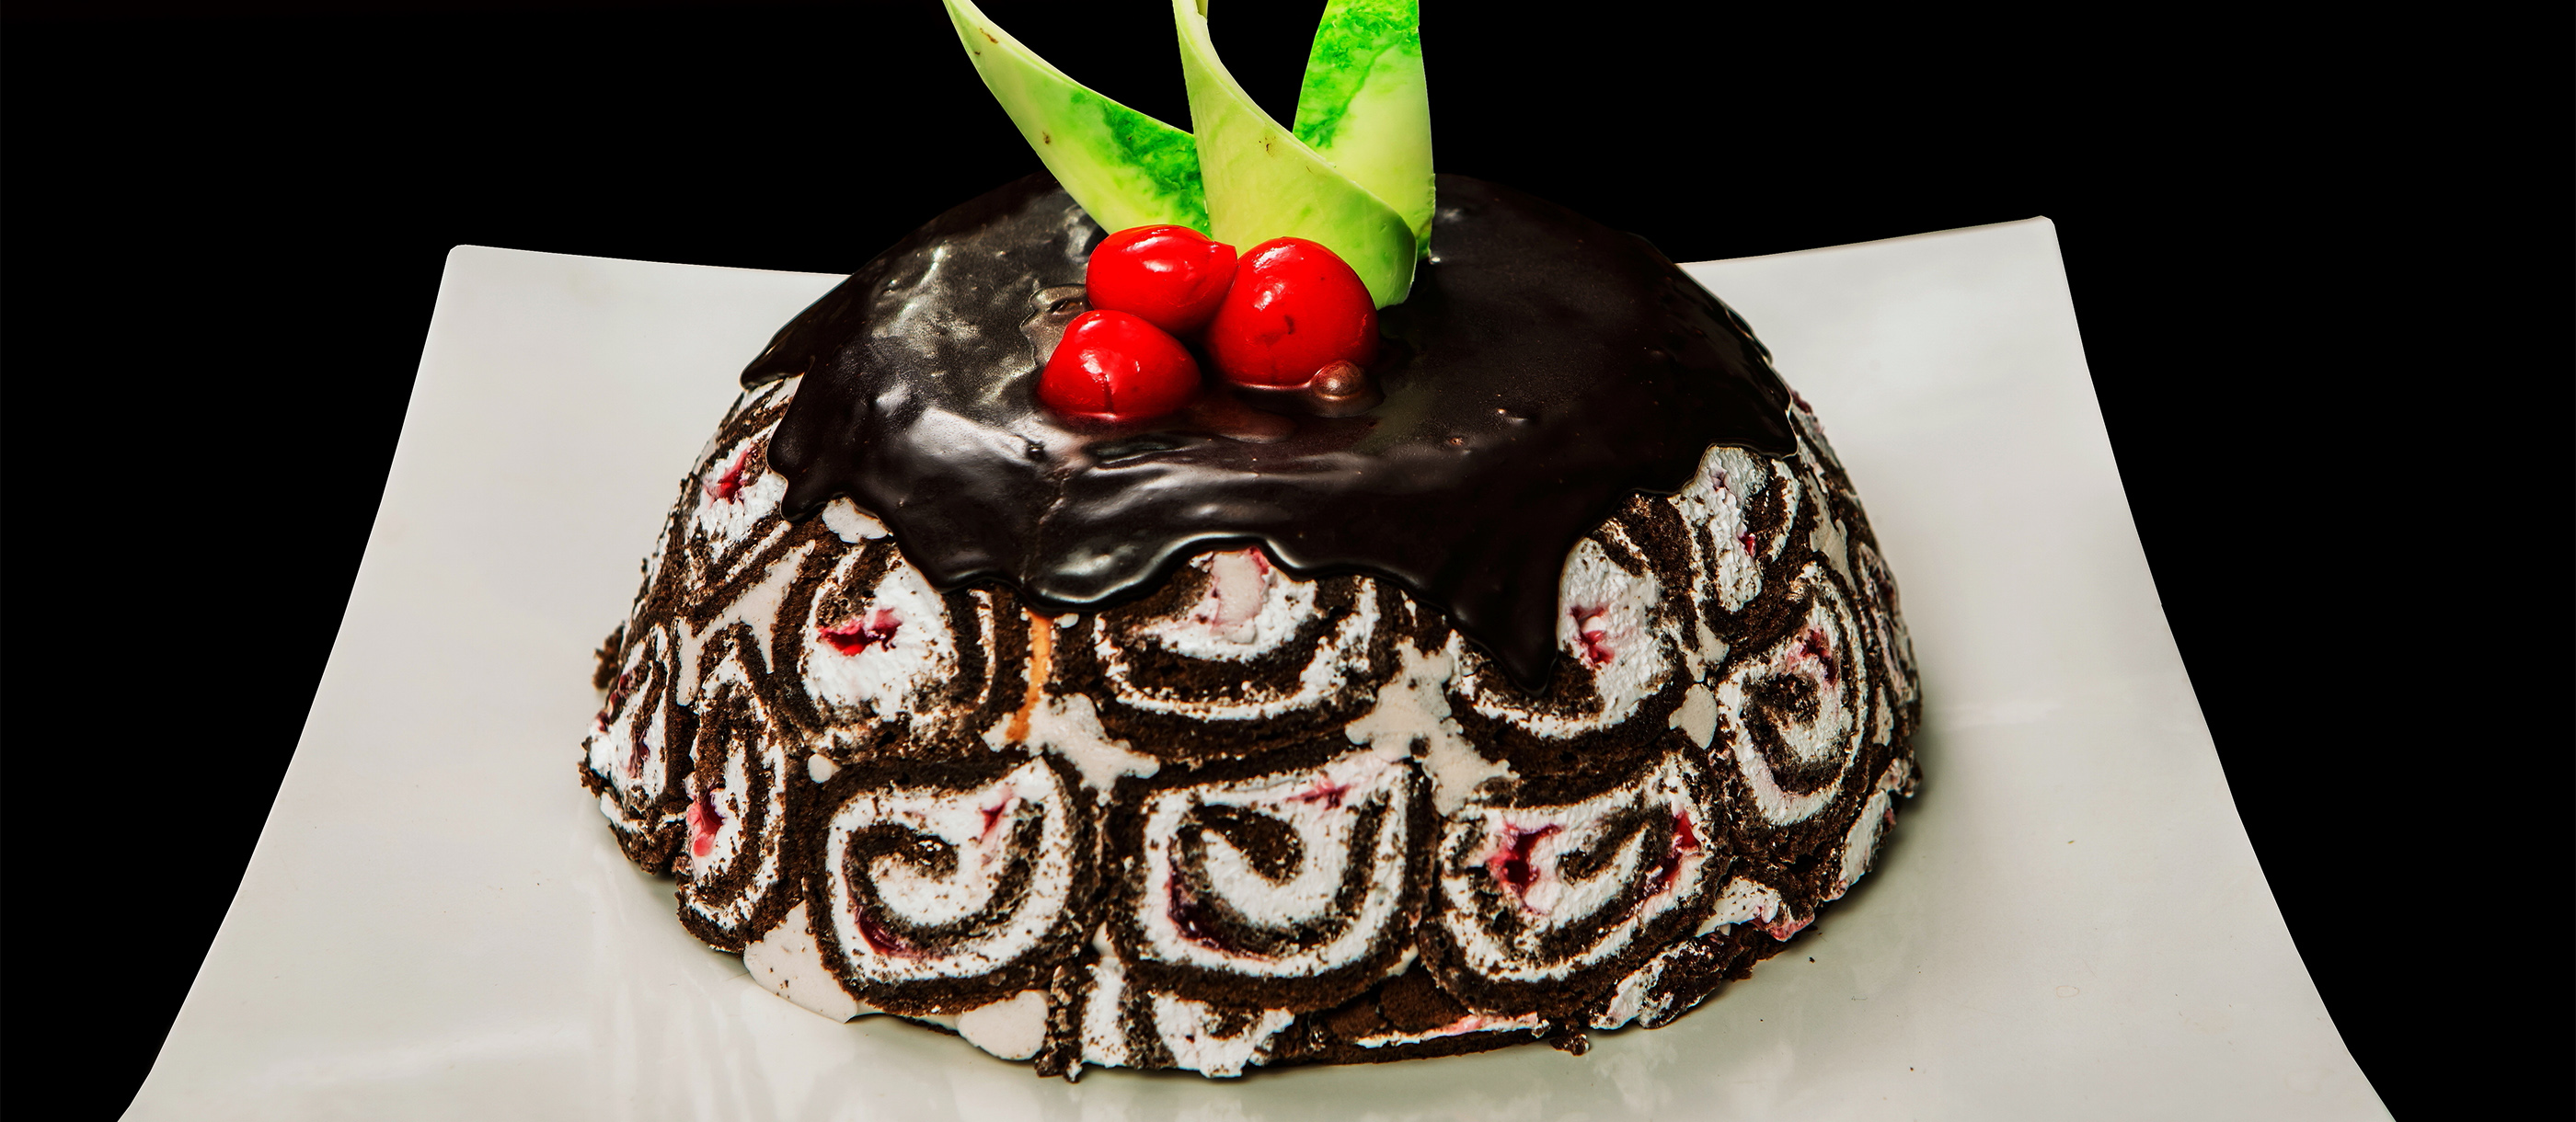 100 Most Popular Cakes in the World - TasteAtlas